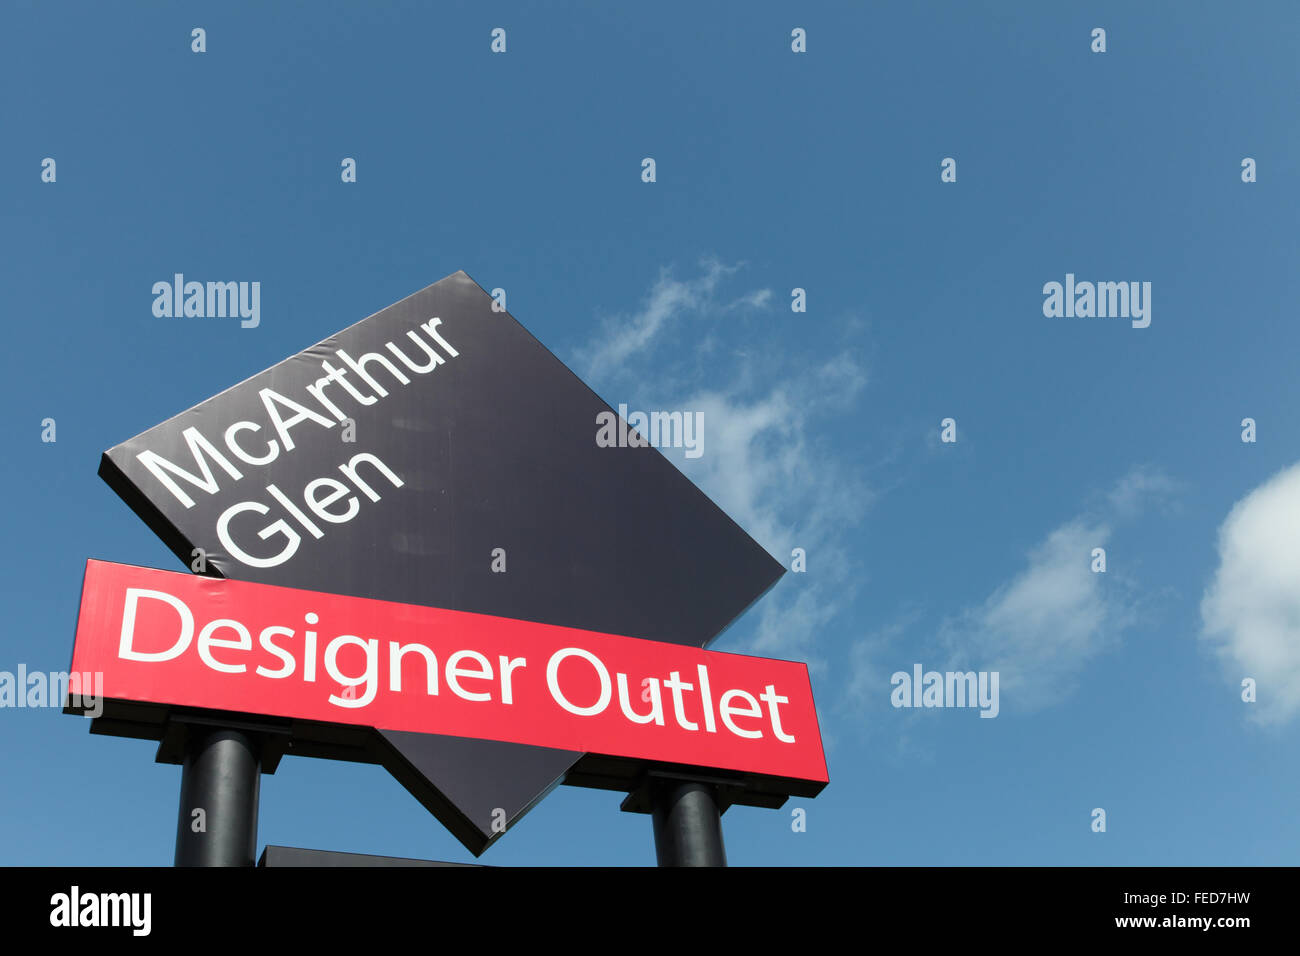 McArthur Glen Designer Outlet, Bridgend, South Wales, Australia Stockfoto